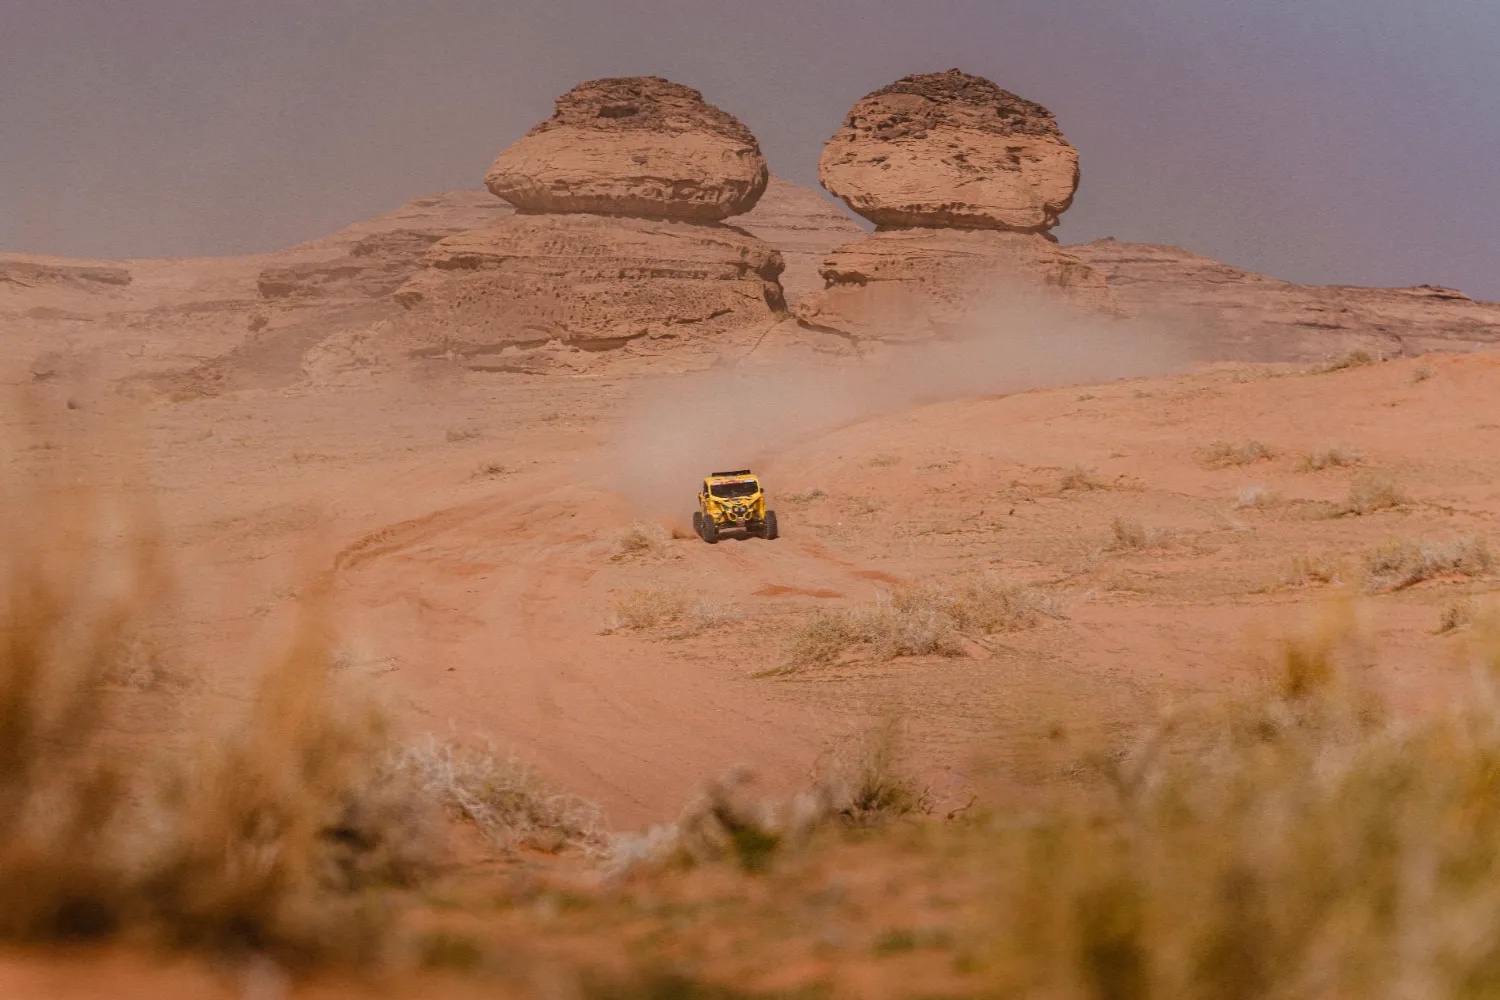 „Rentway Dakar Team“ nuotr.